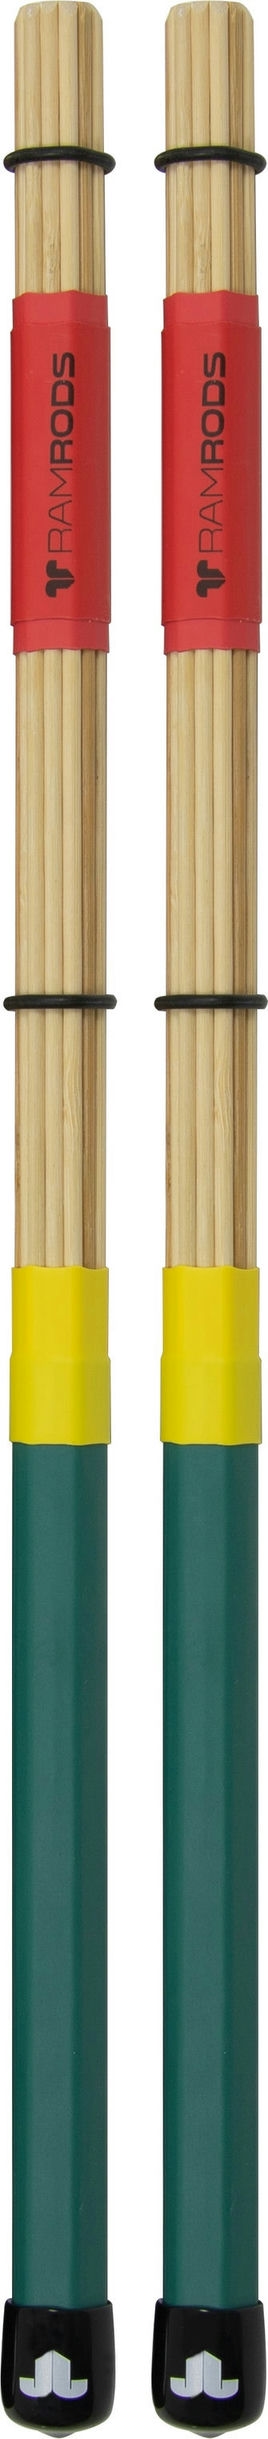 An image of RAMRODS Reggae Rods Sticks